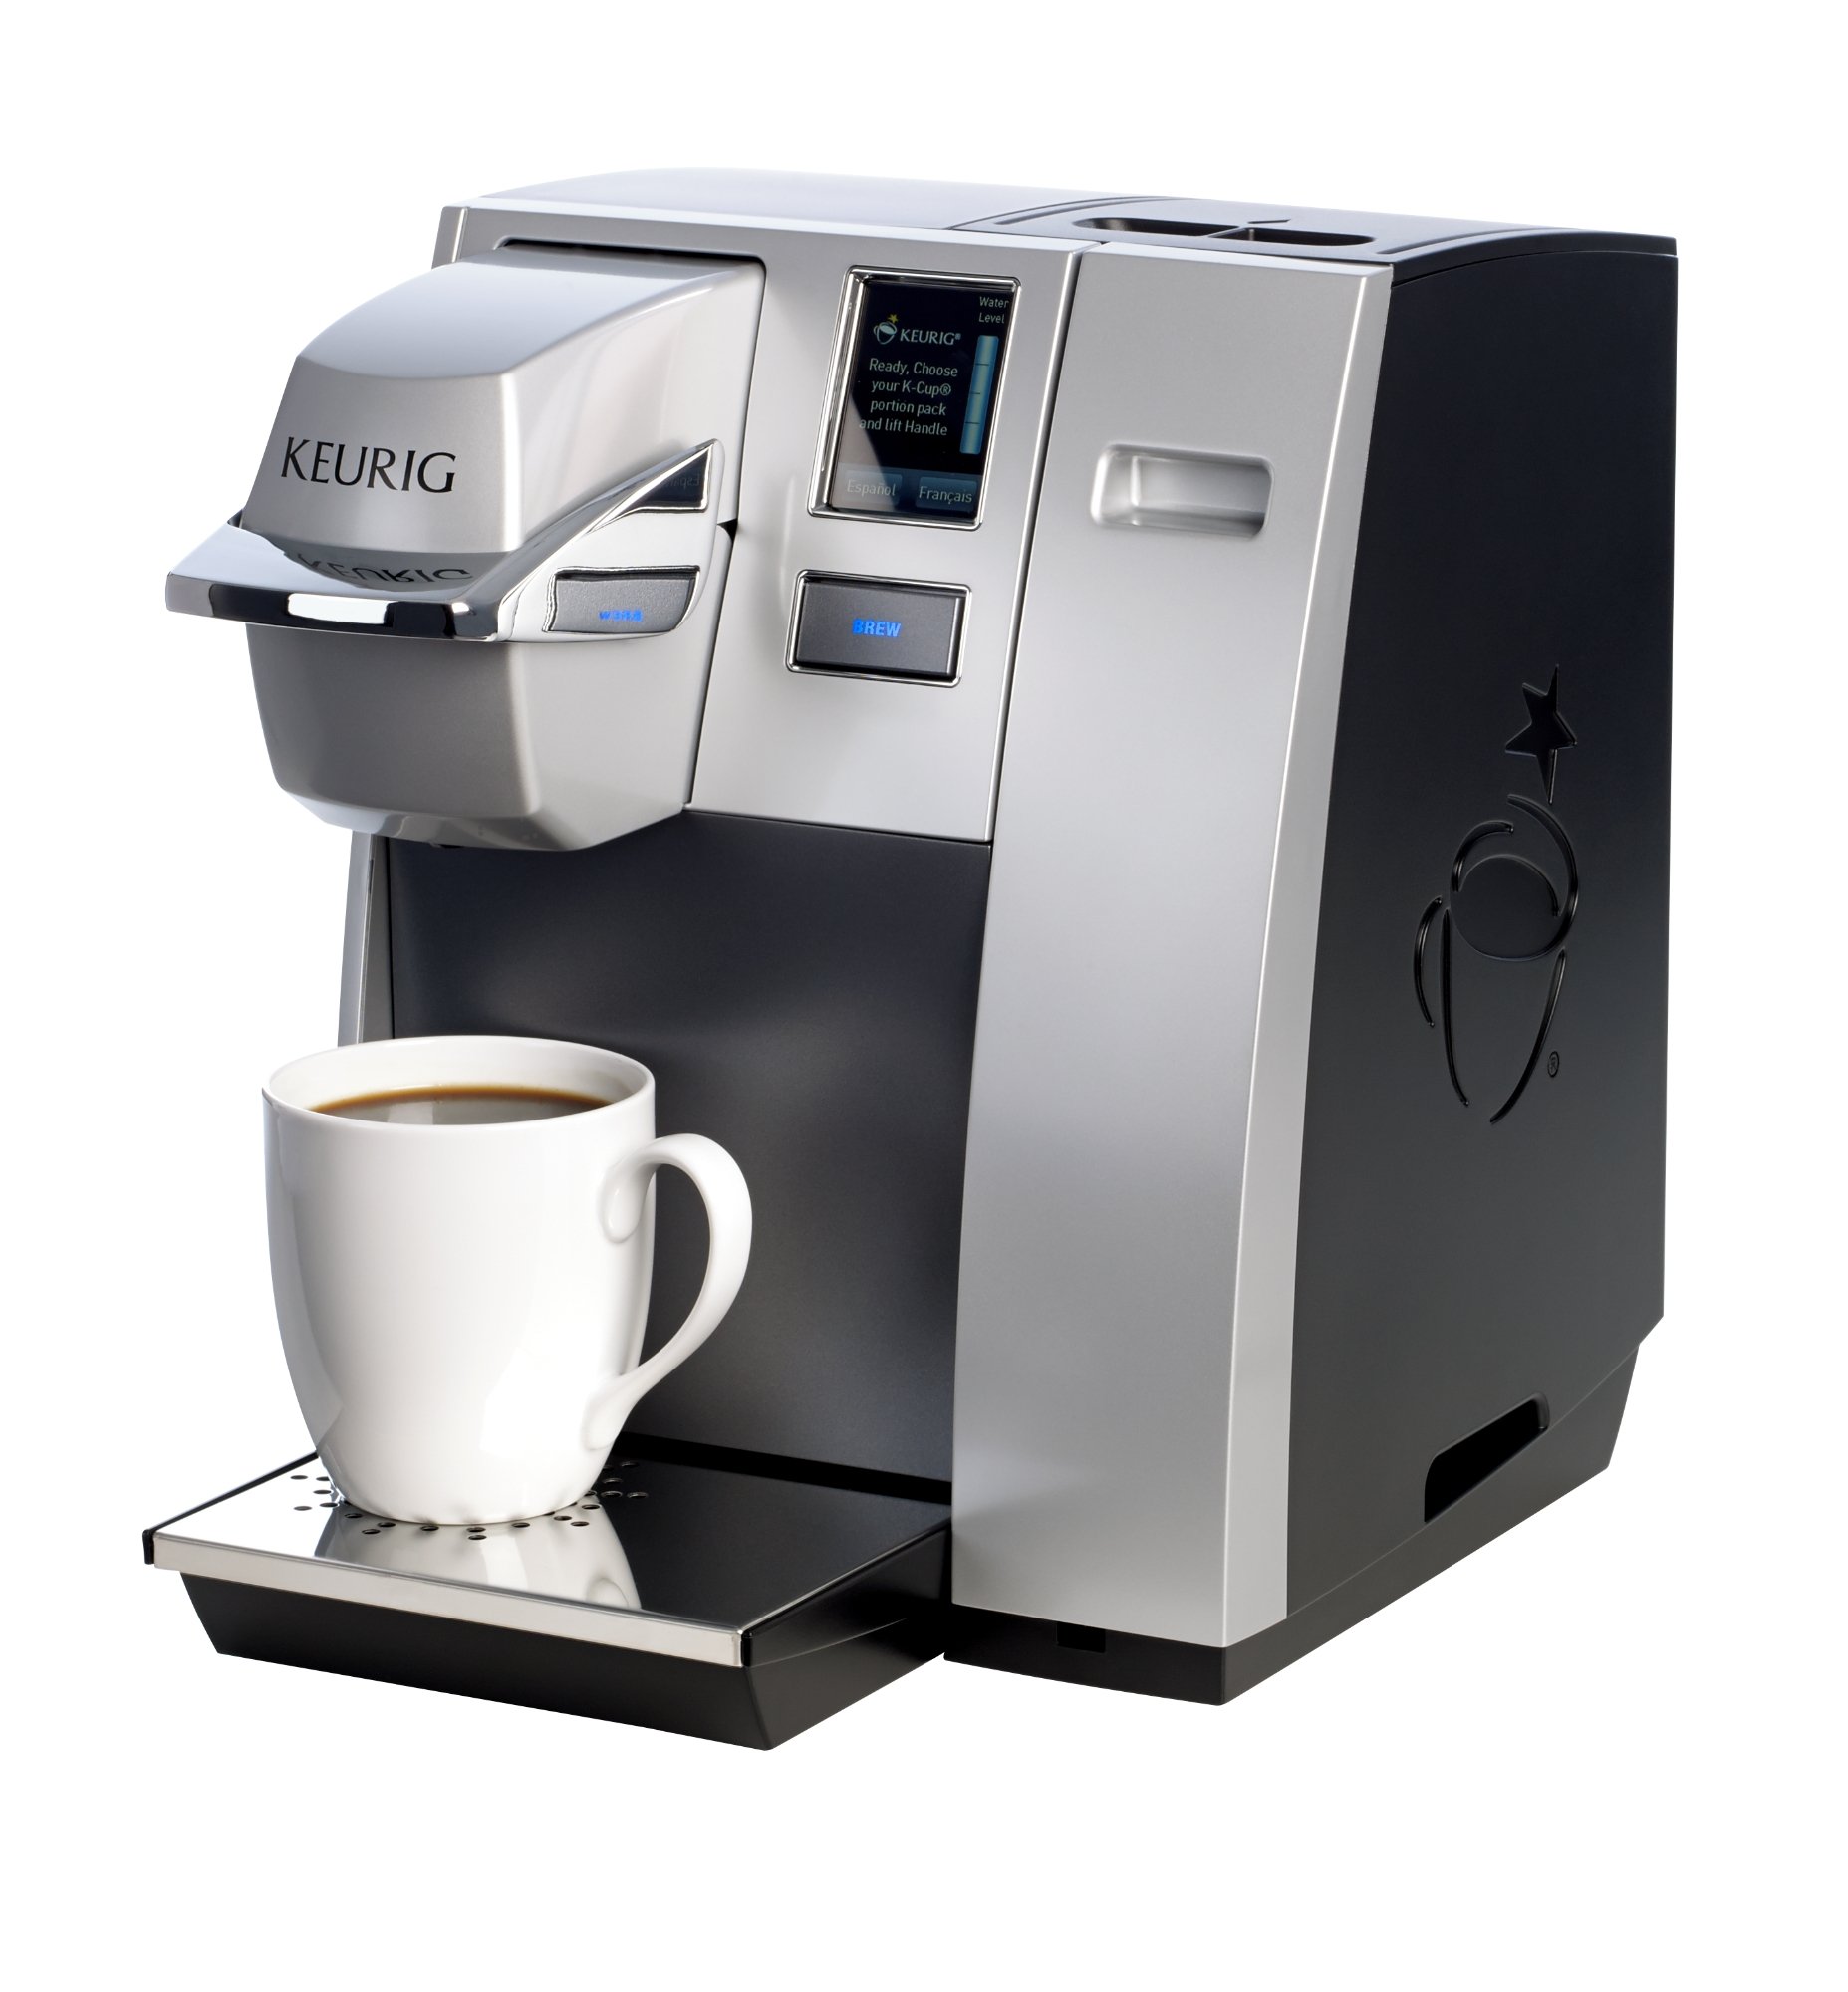 Kegco K309B-1 Kegerator Black, 2 Faucet & Keurig K155 Office Pro Single Cup Commercial K-Cup Pod Coffee Maker, Silver